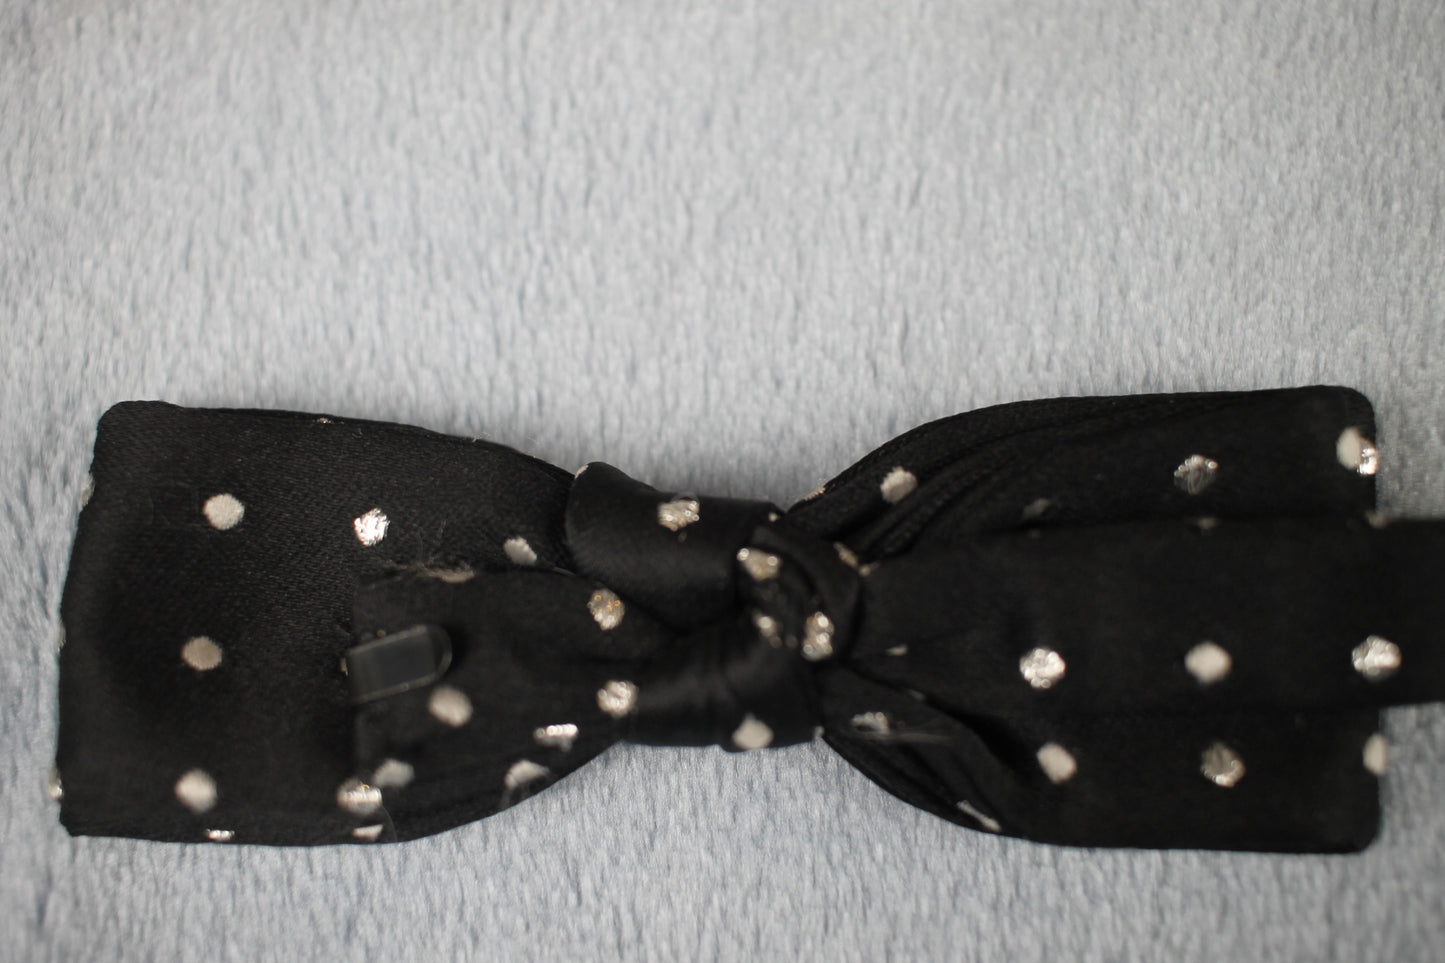 Vintage Stange Berlin pre-tied black silver dot pattern bow tie adjustable